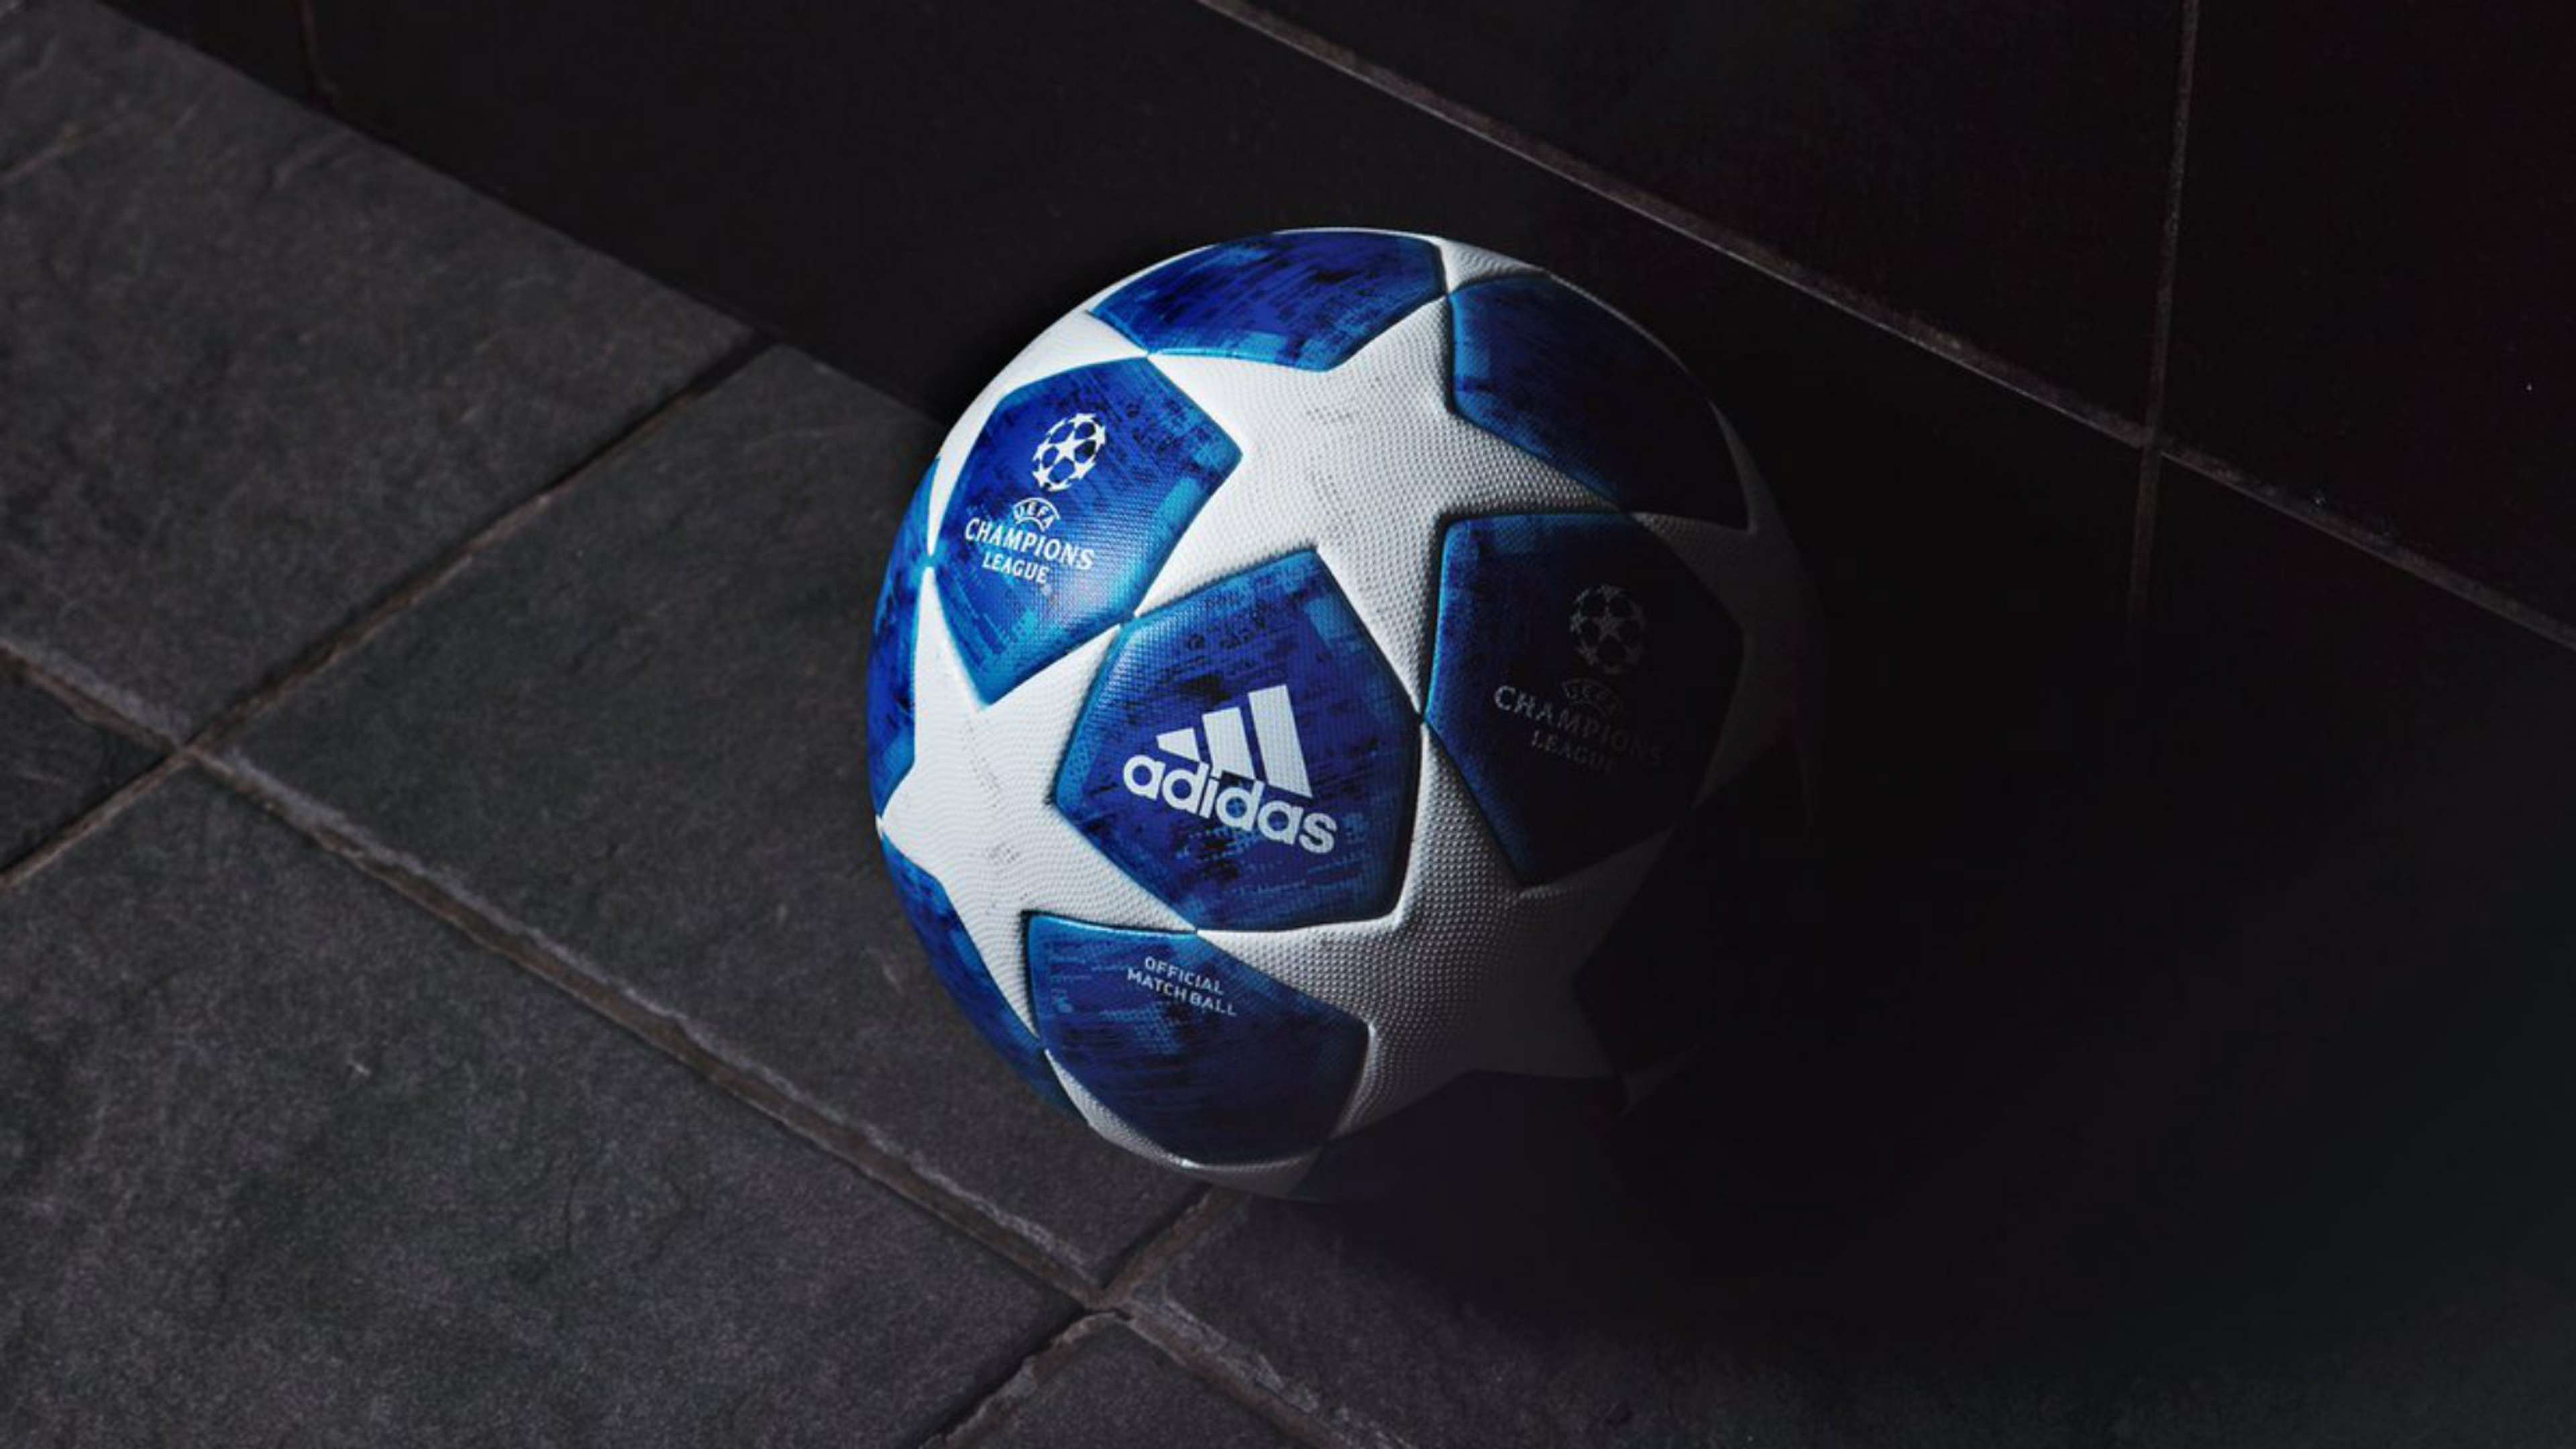 Adidas Finale 18 Champions League ball